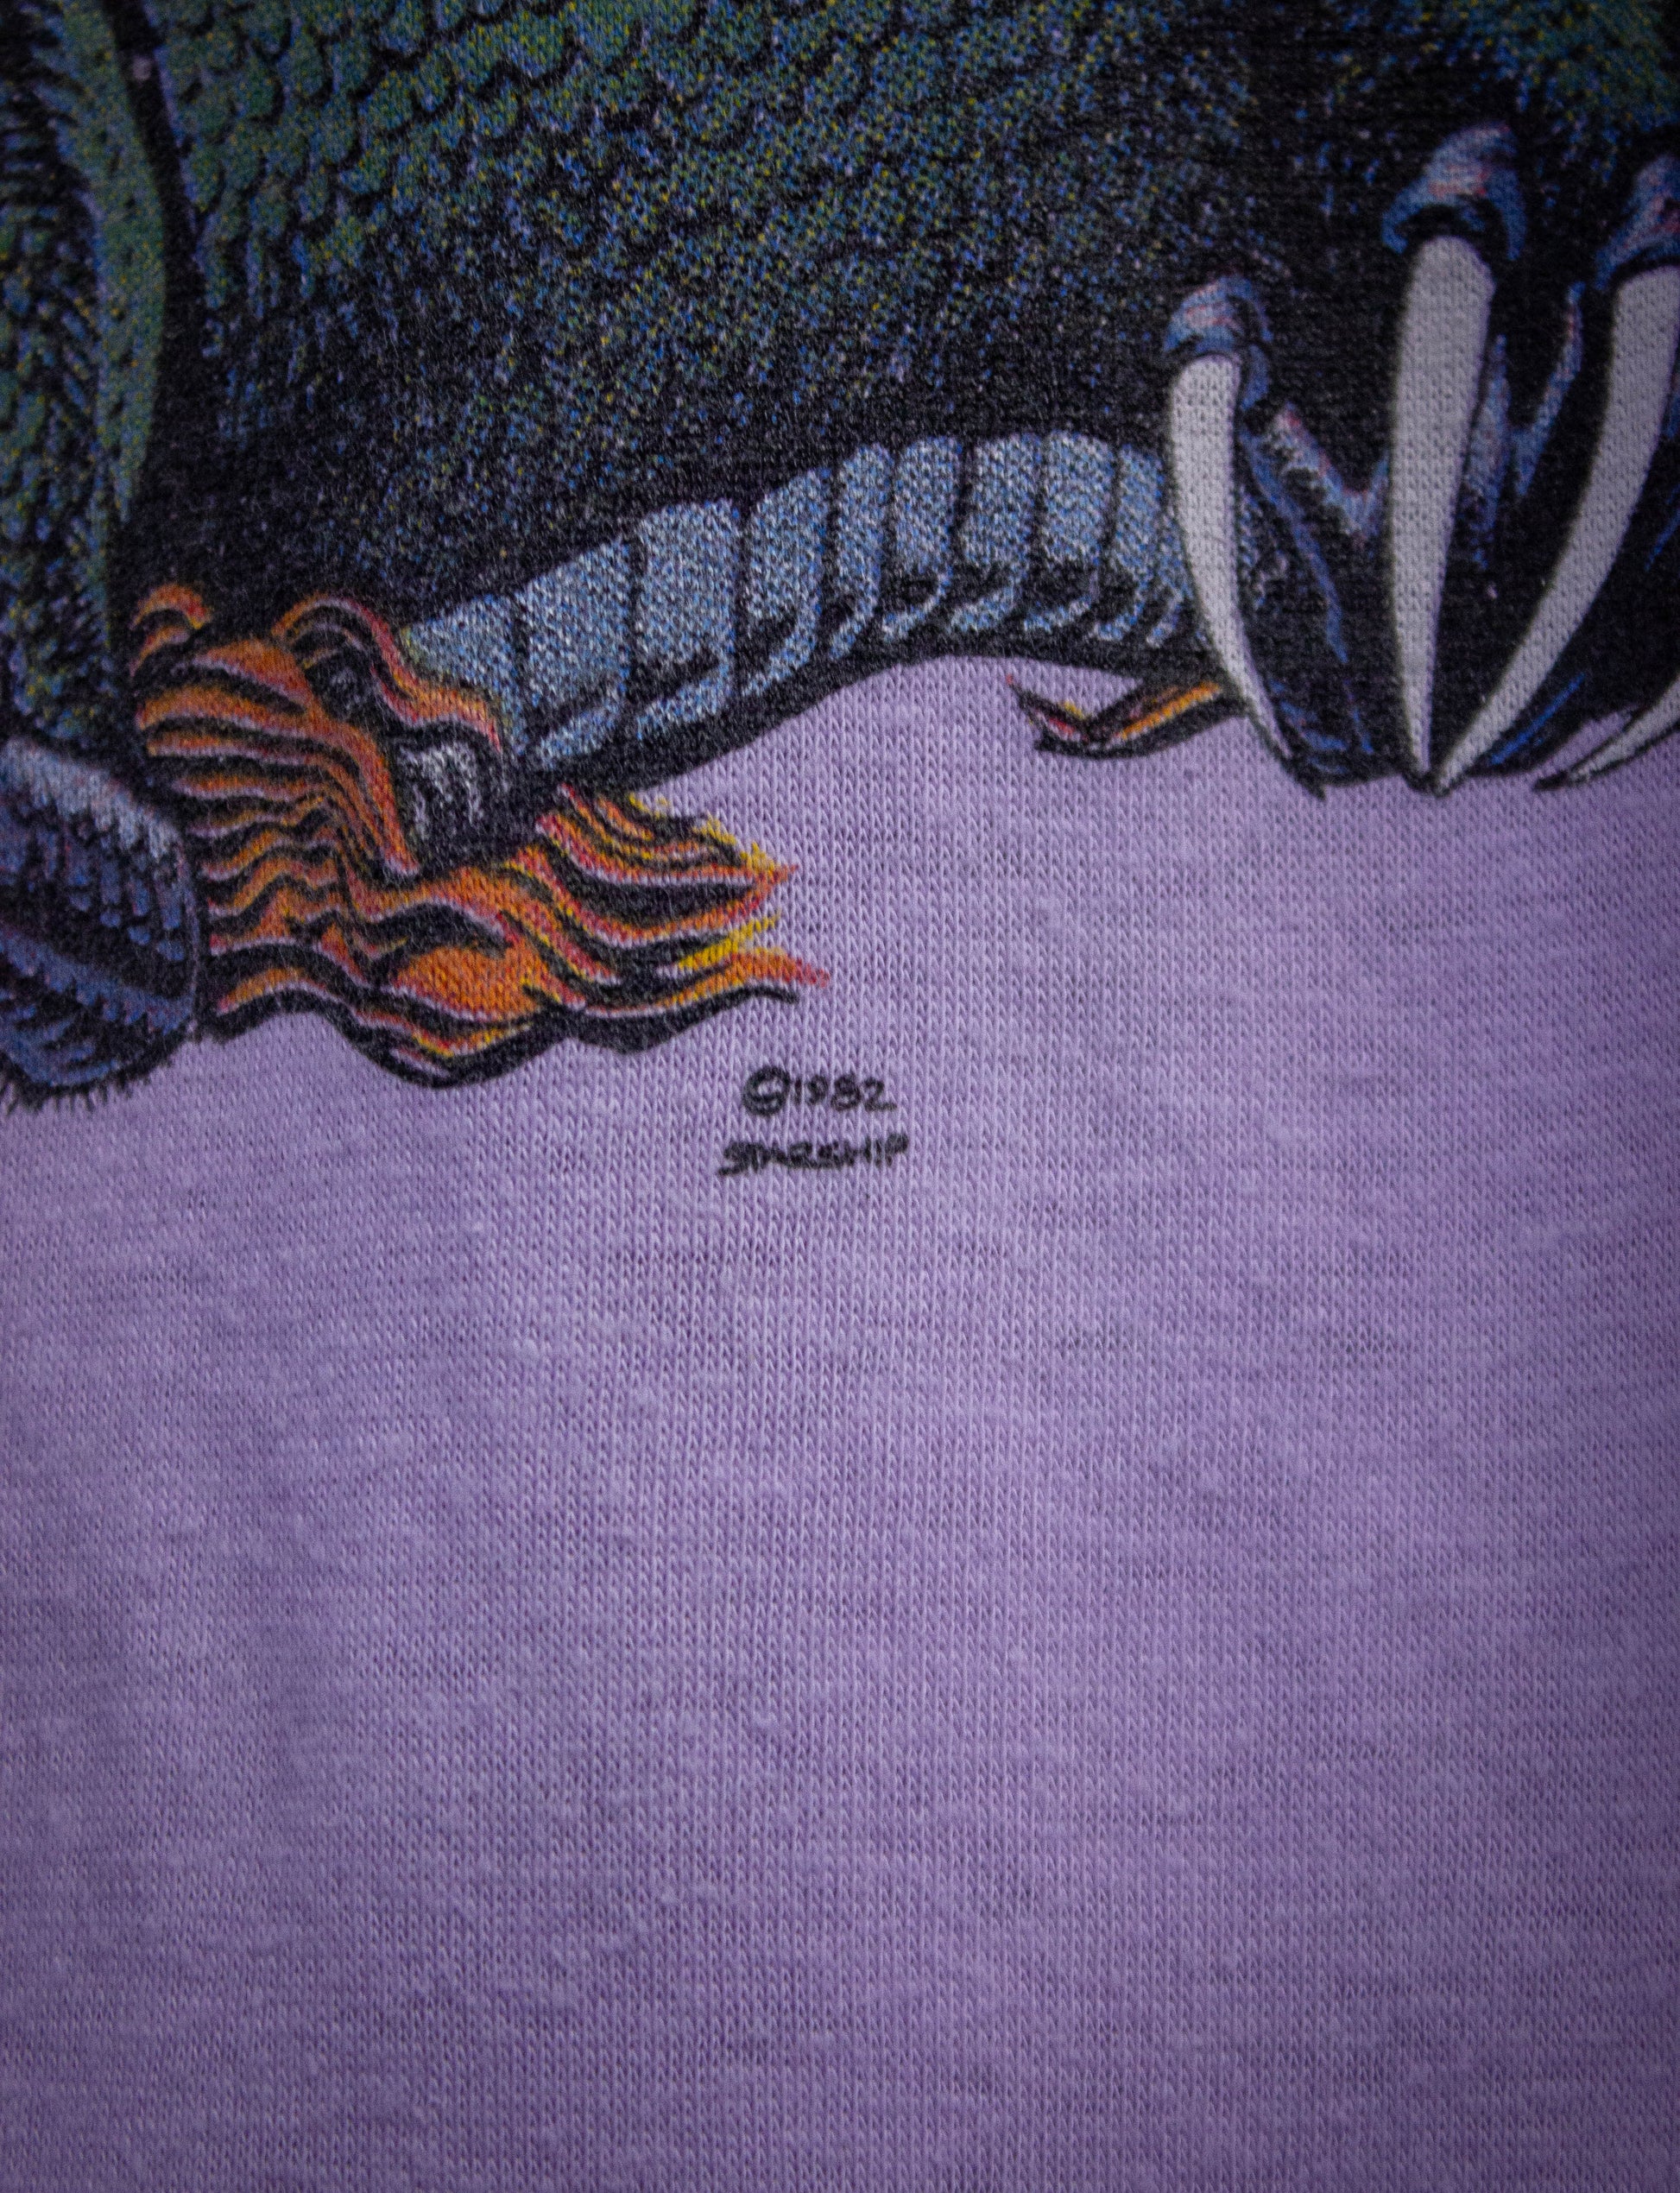 Vintage Jefferson Starship Concert Muscle Shirt 1984 Purple Small